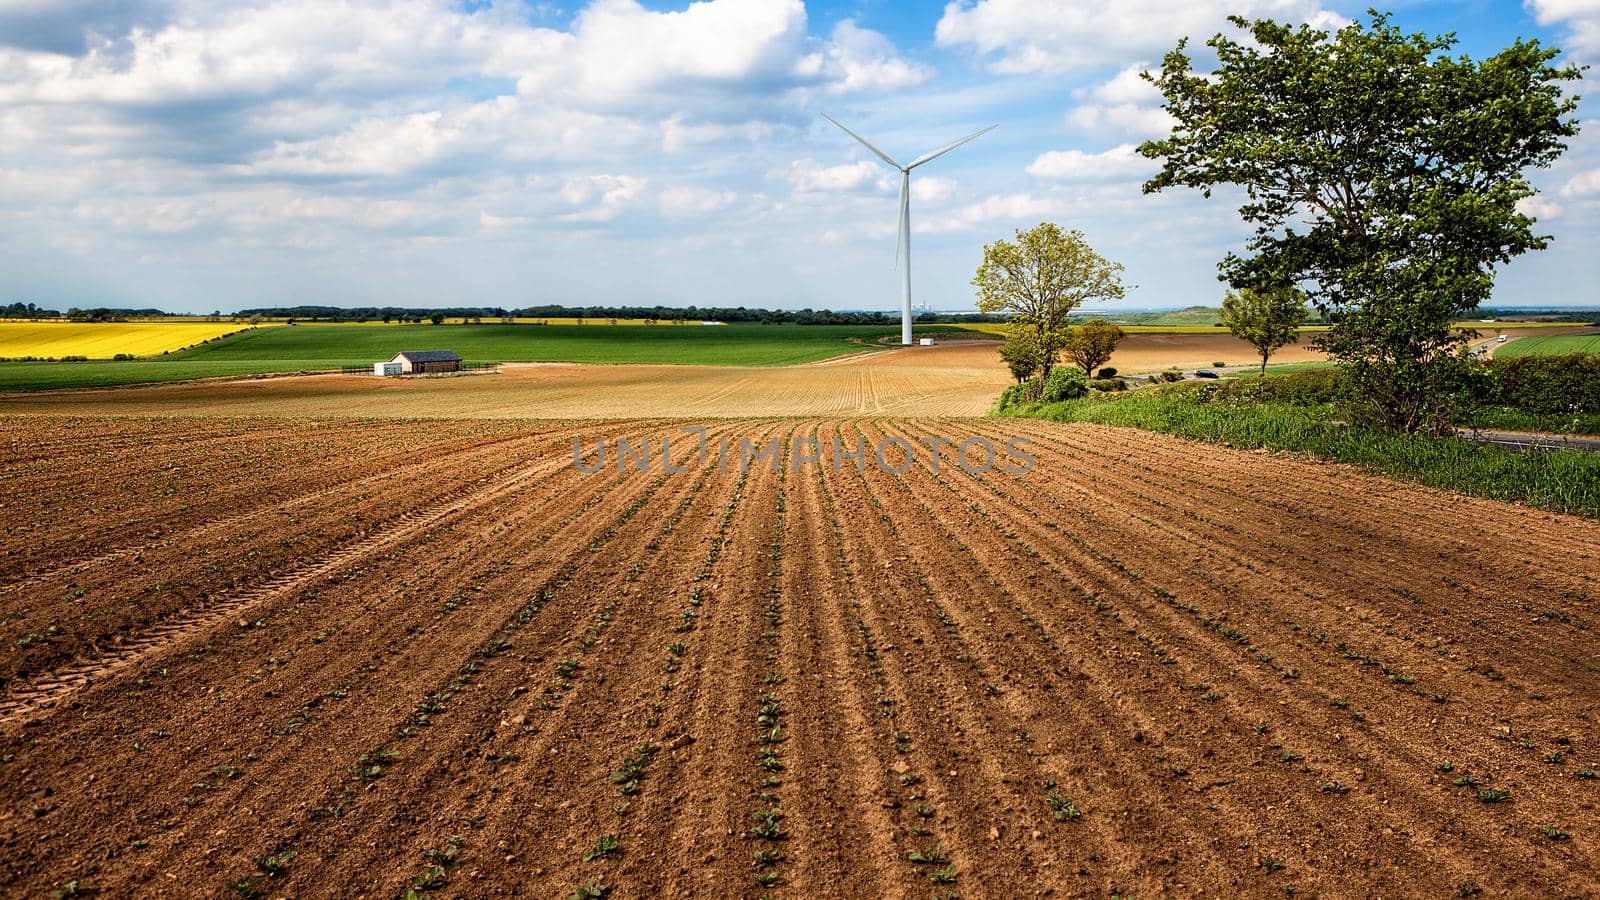 Wind turbine in a farmland landscape